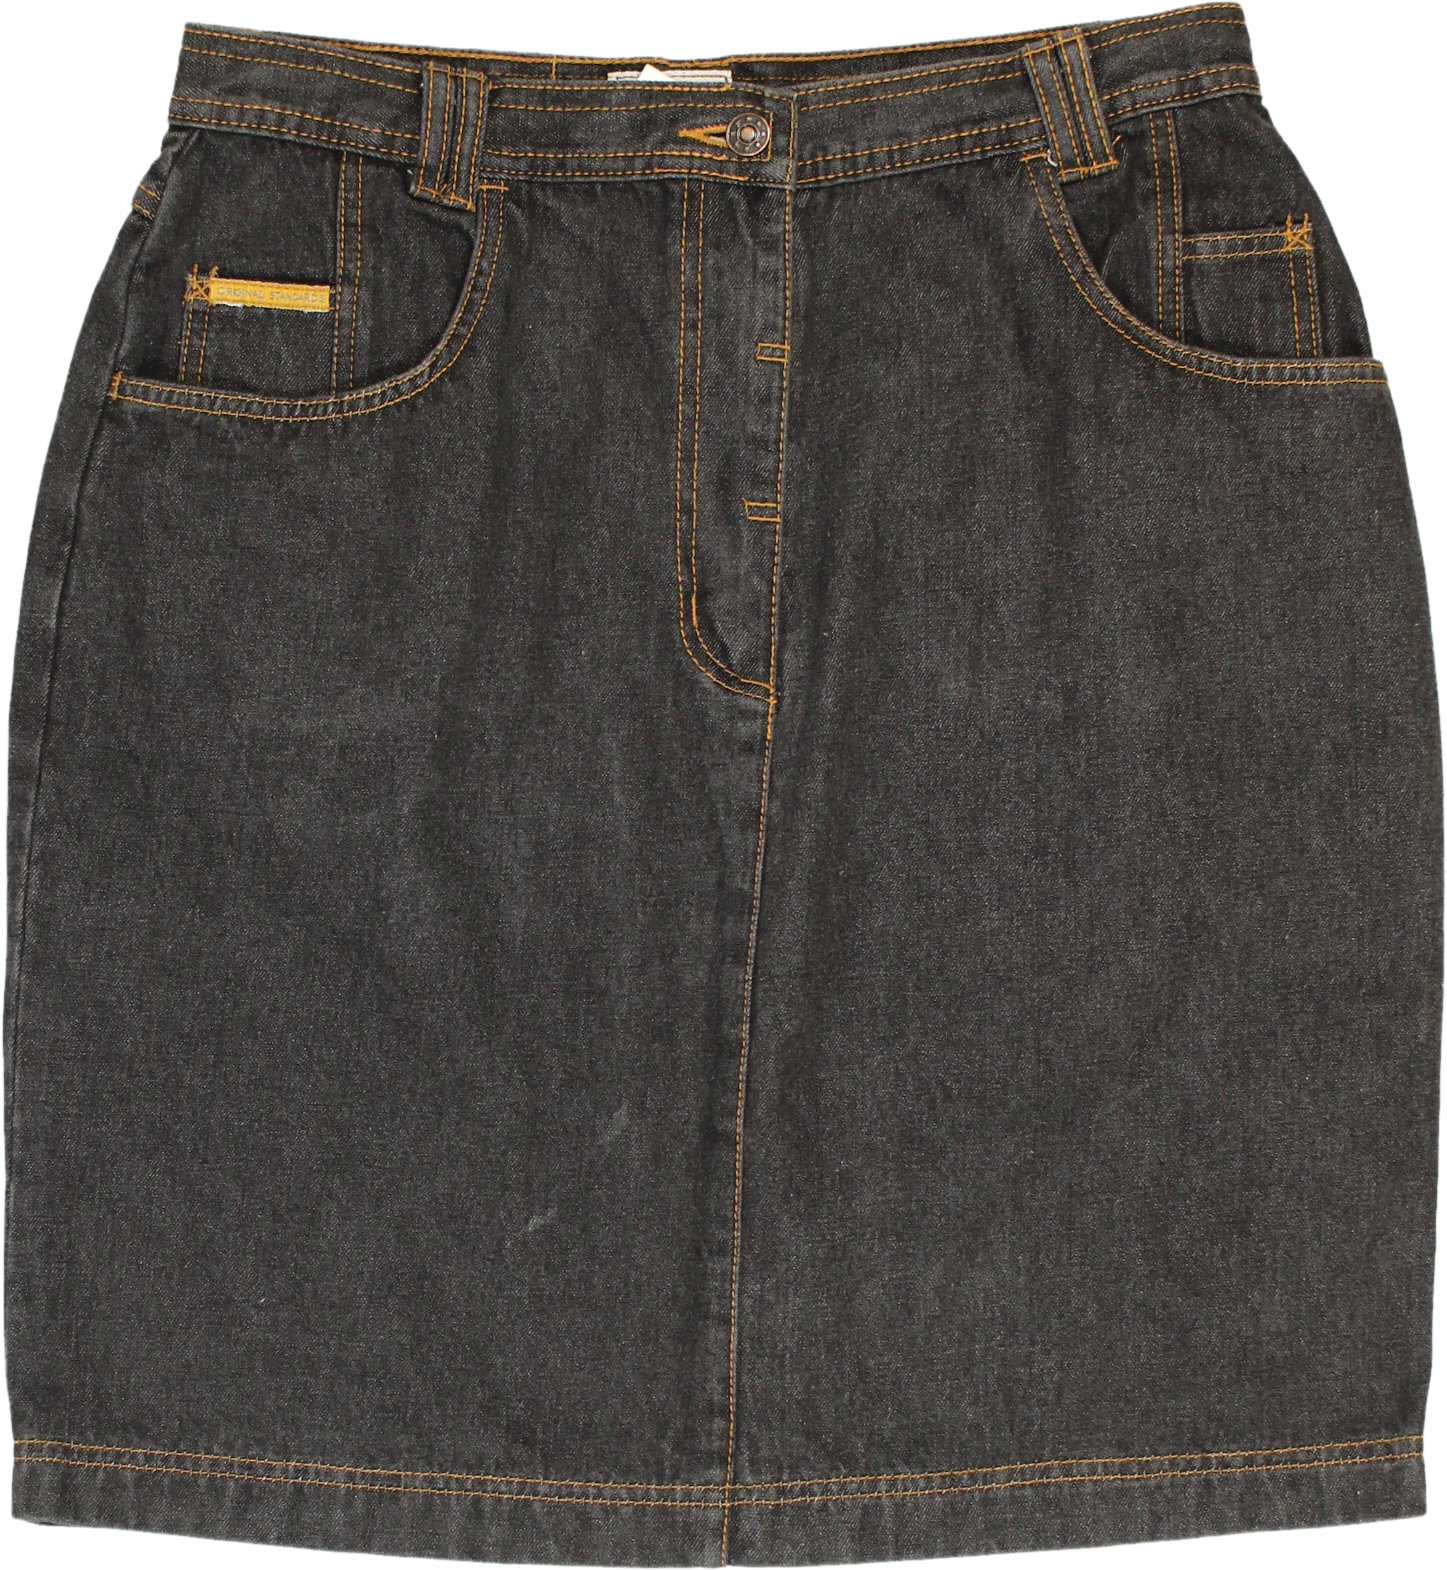 Trendlines - Denim Skirt- ThriftTale.com - Vintage and second handclothing